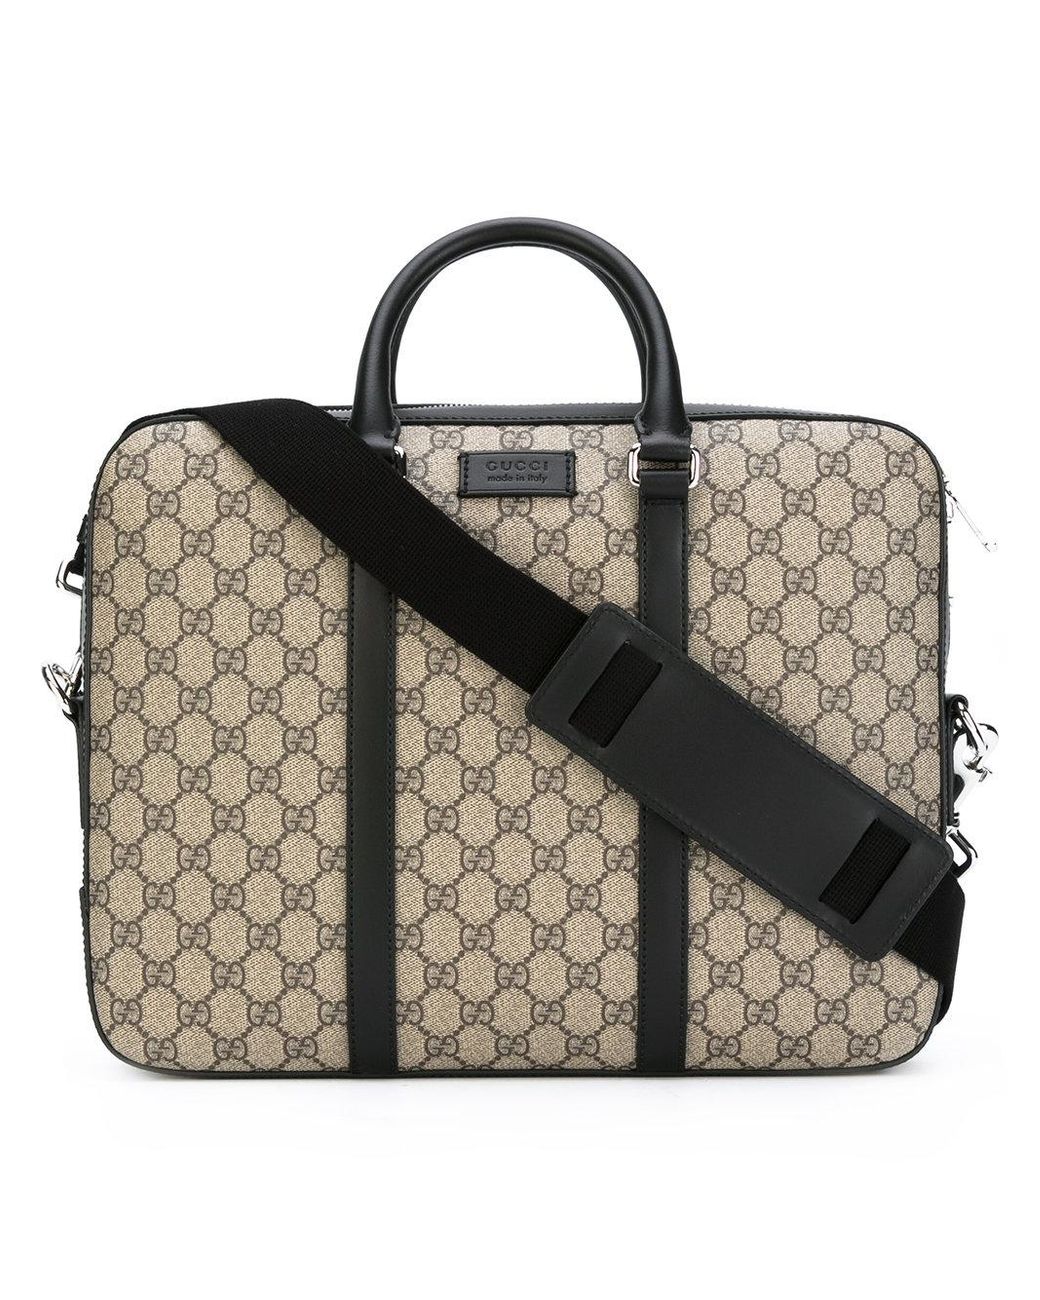 Gucci Gg Supreme Laptop Bag in Black | Lyst